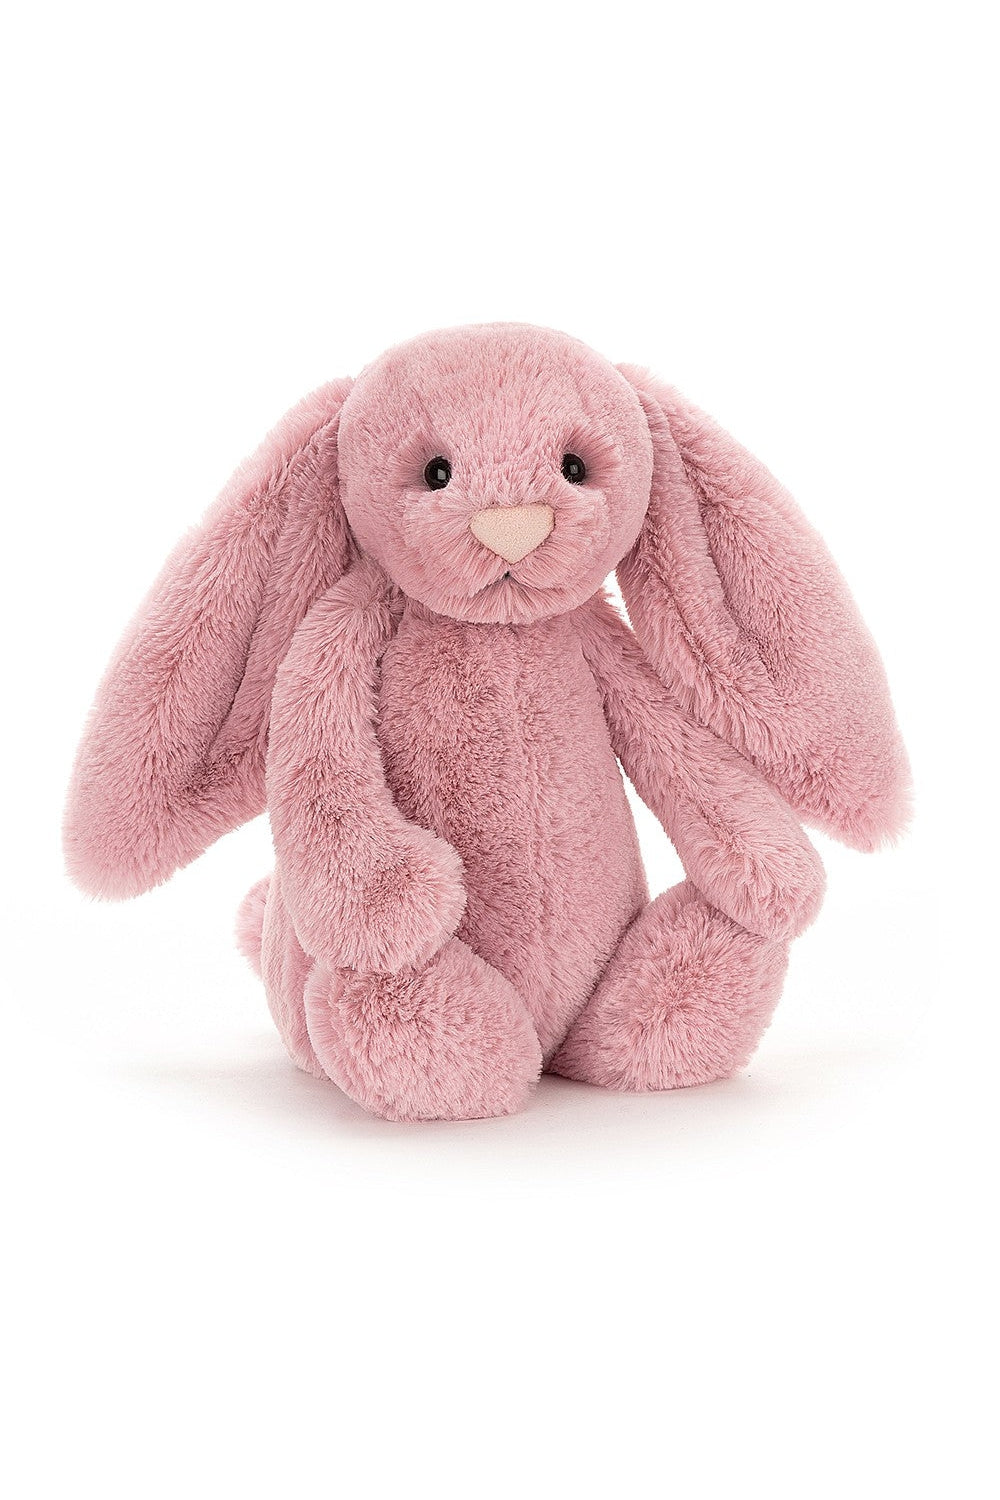 Bashful Bunnies – Blickenstaffs Toy Store